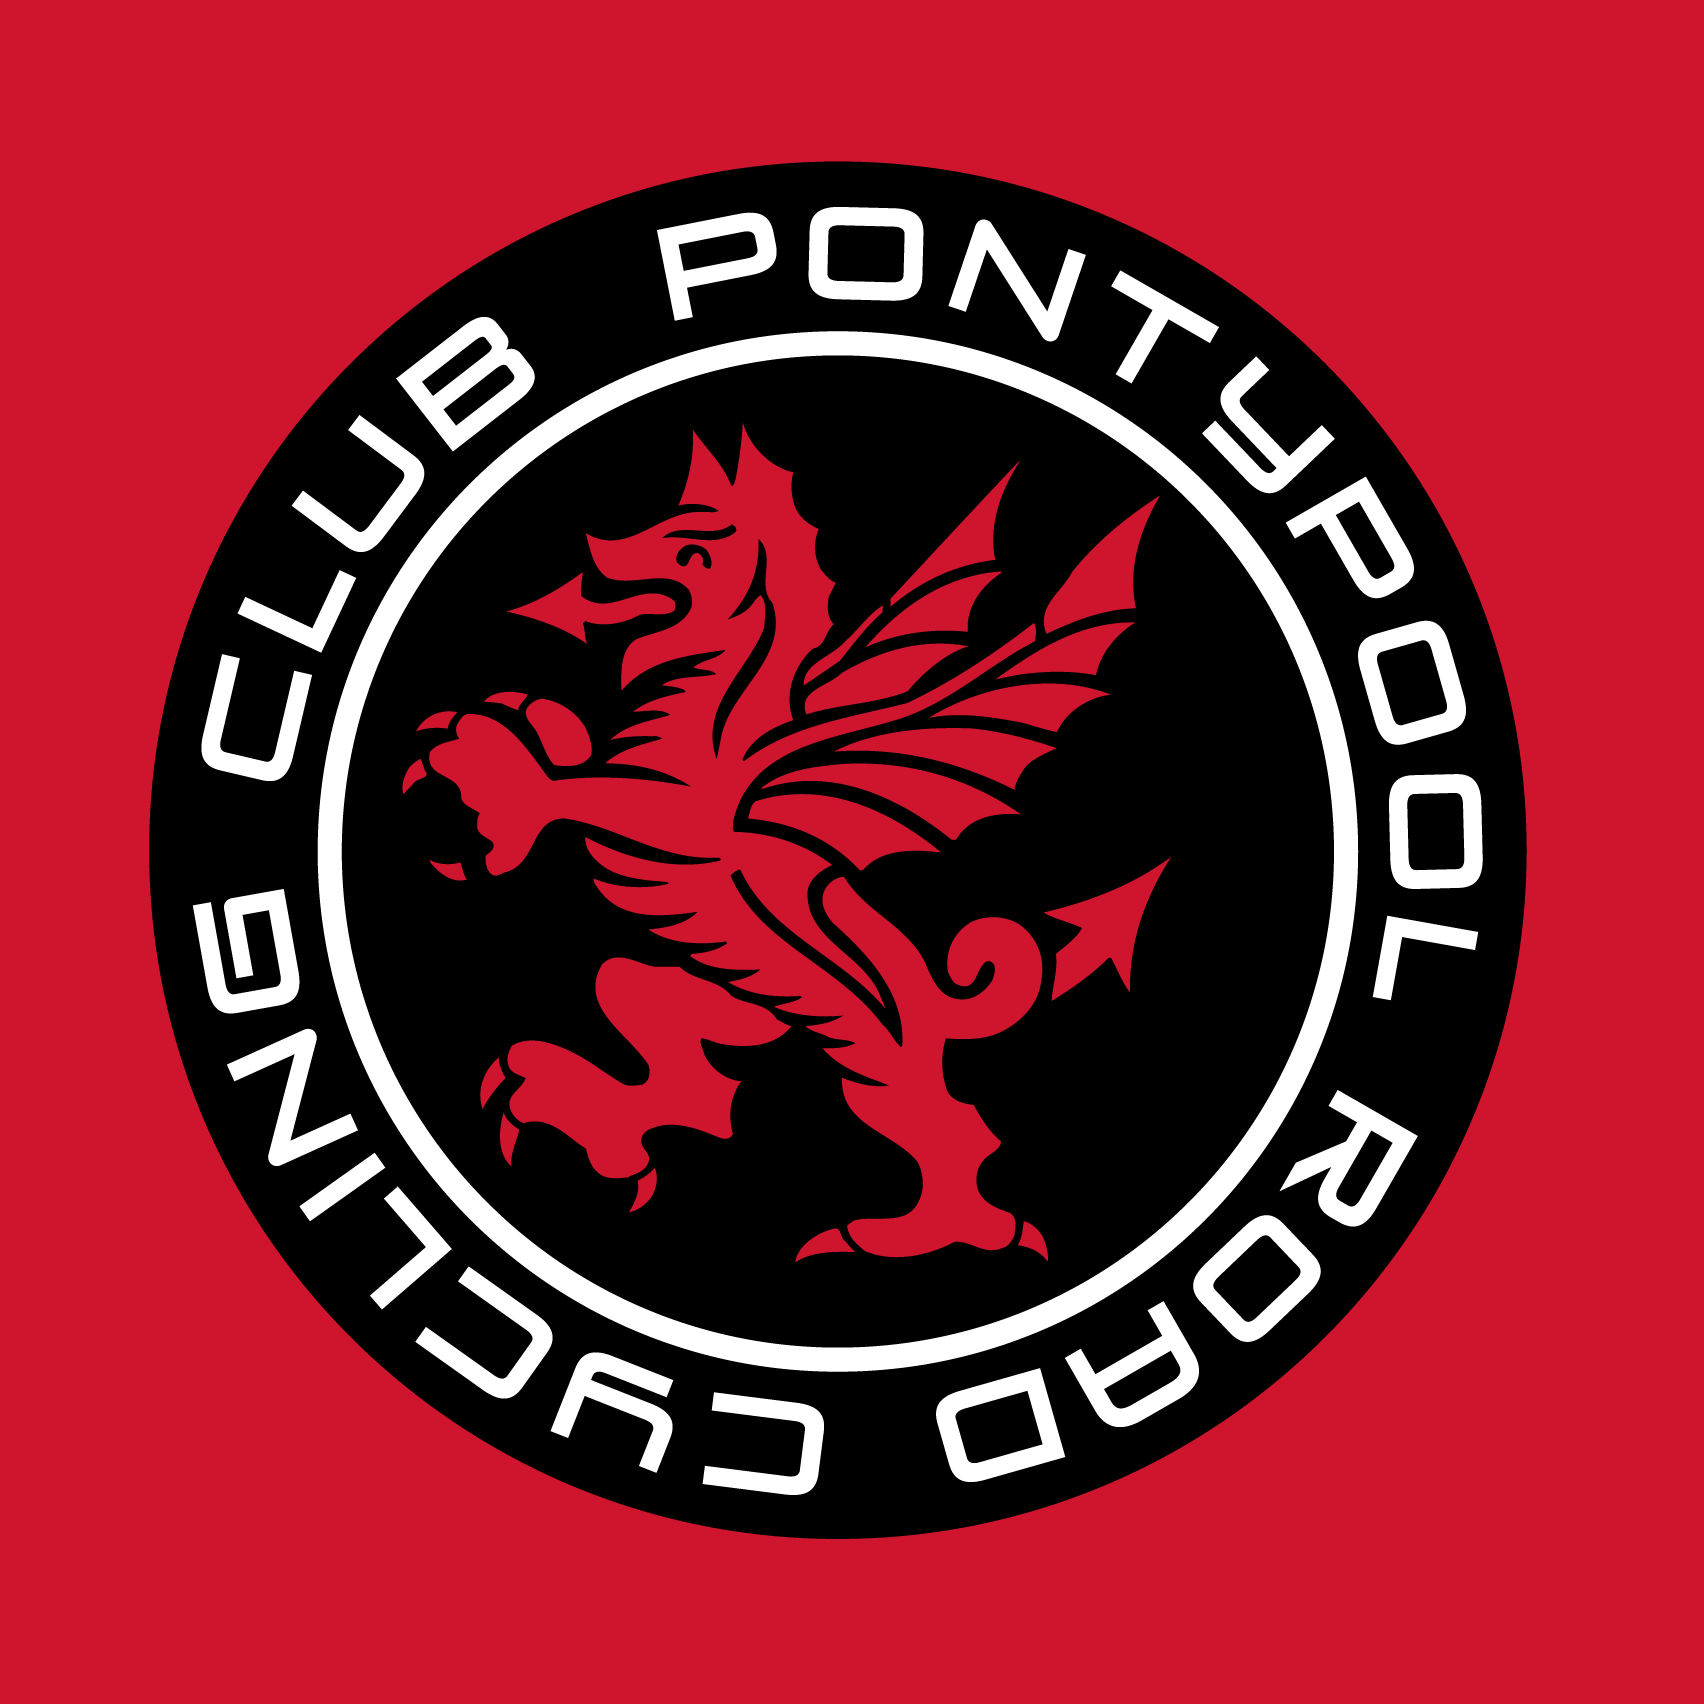 Club Image for PONTYPOOL